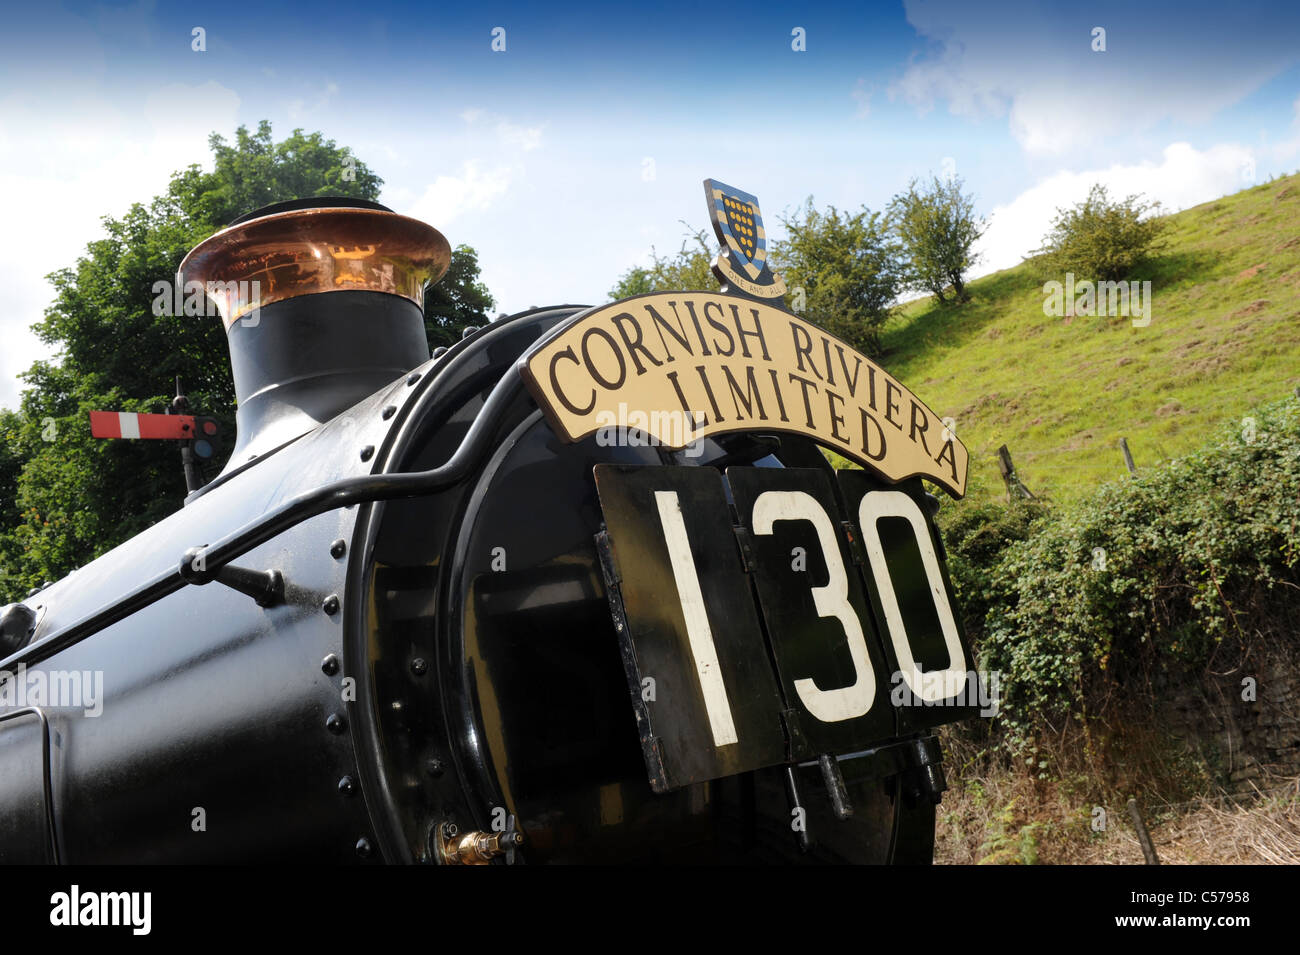 Cornish Riviera Limited nameplate on Great Western steam locomotive uk Stock Photo